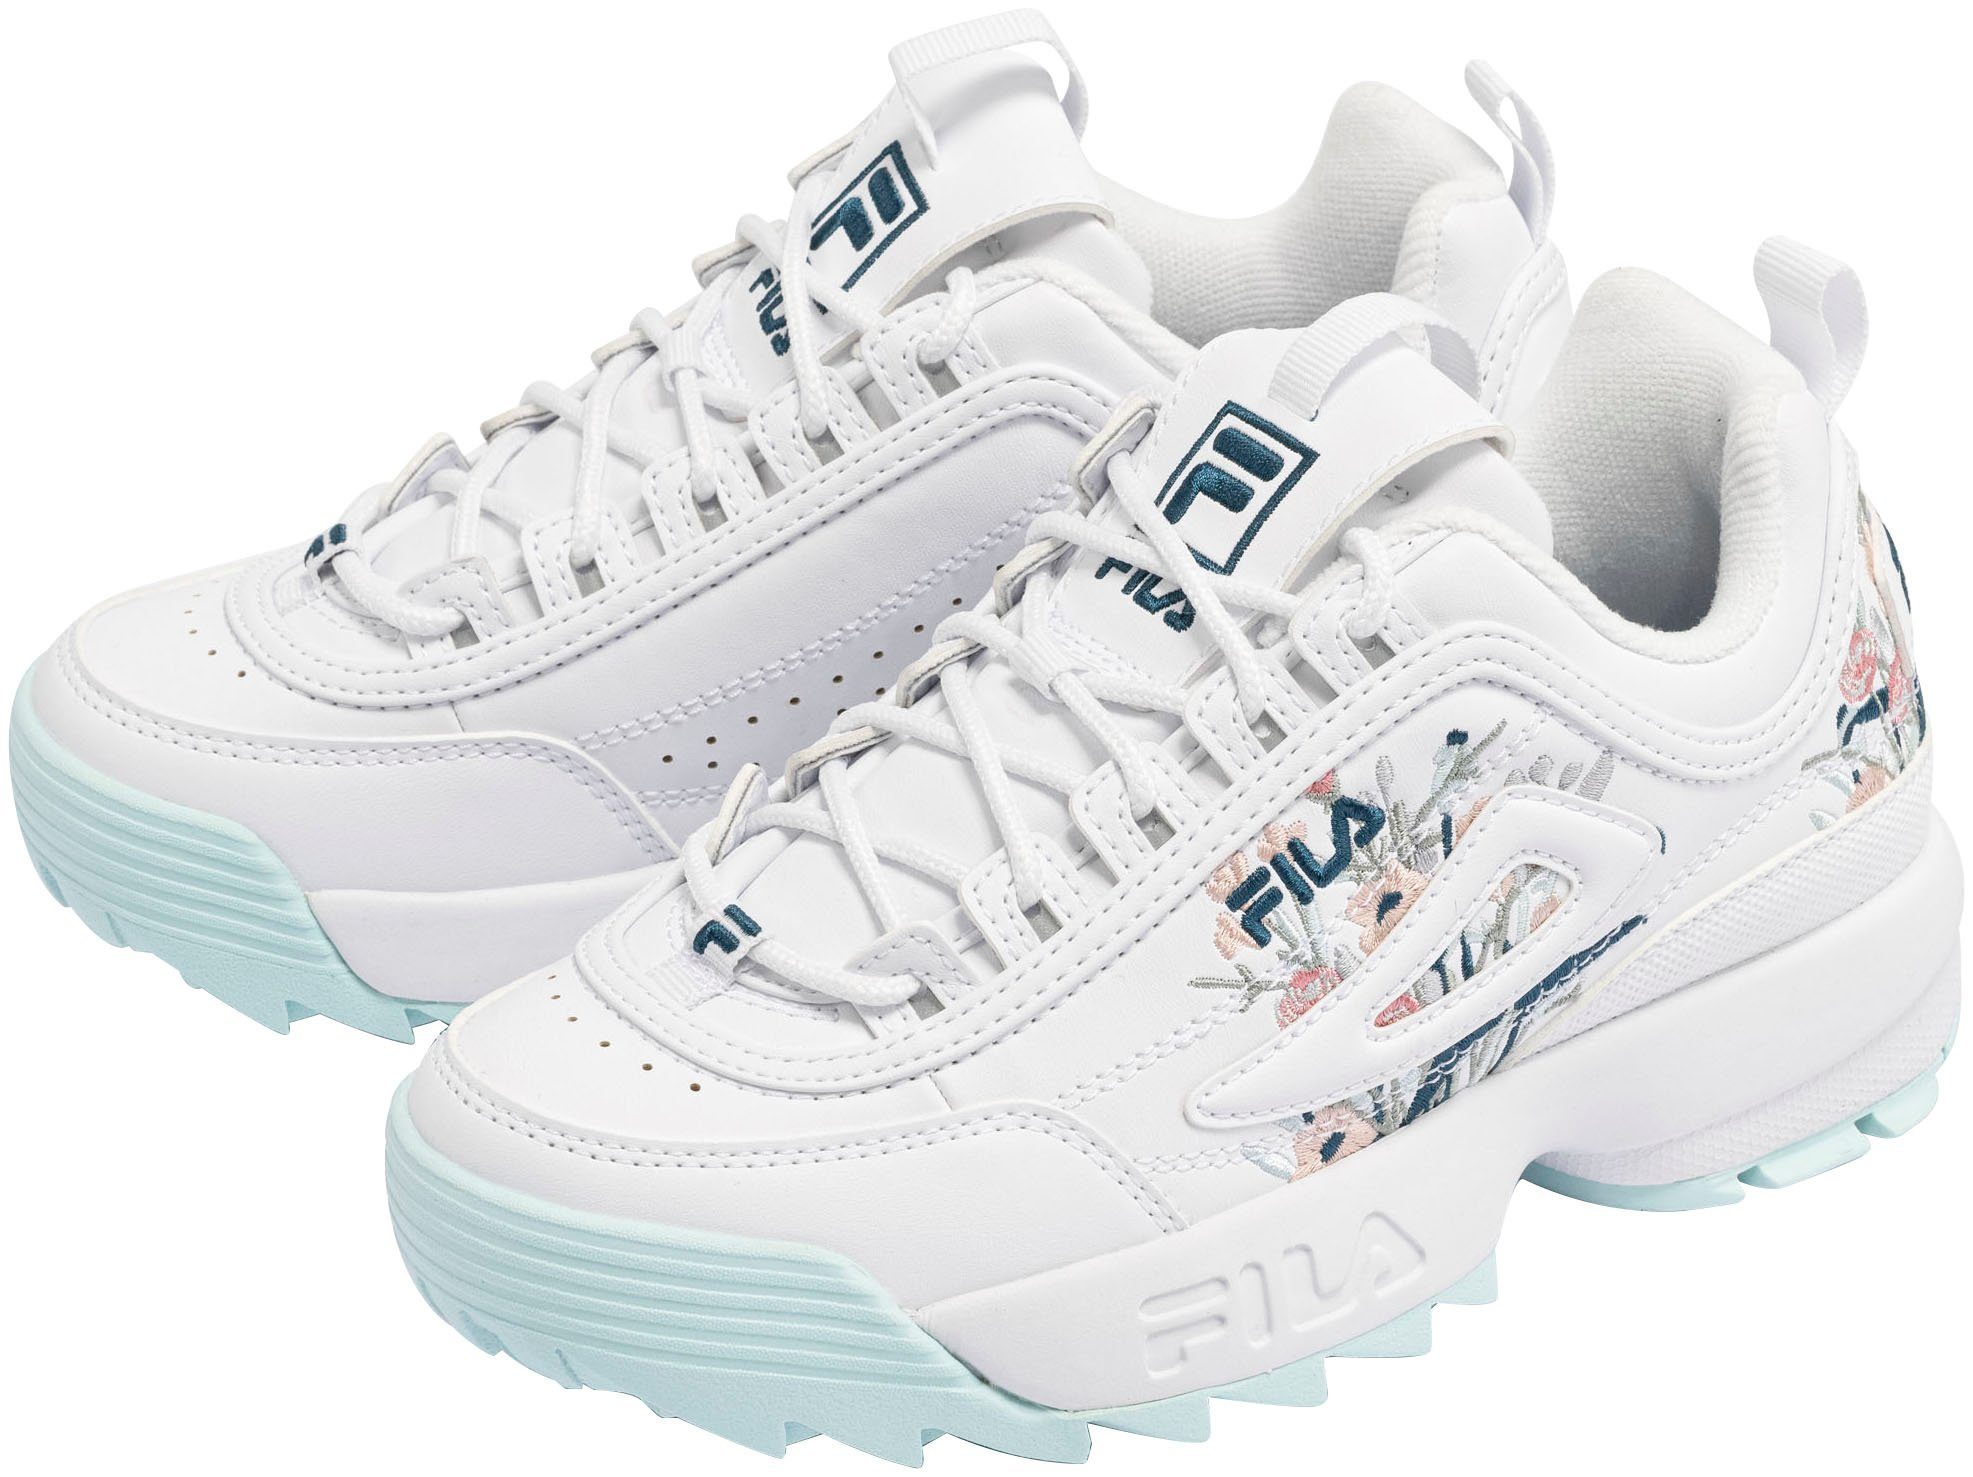 Fila »Disruptor low« Sneaker online kaufen | OTTO